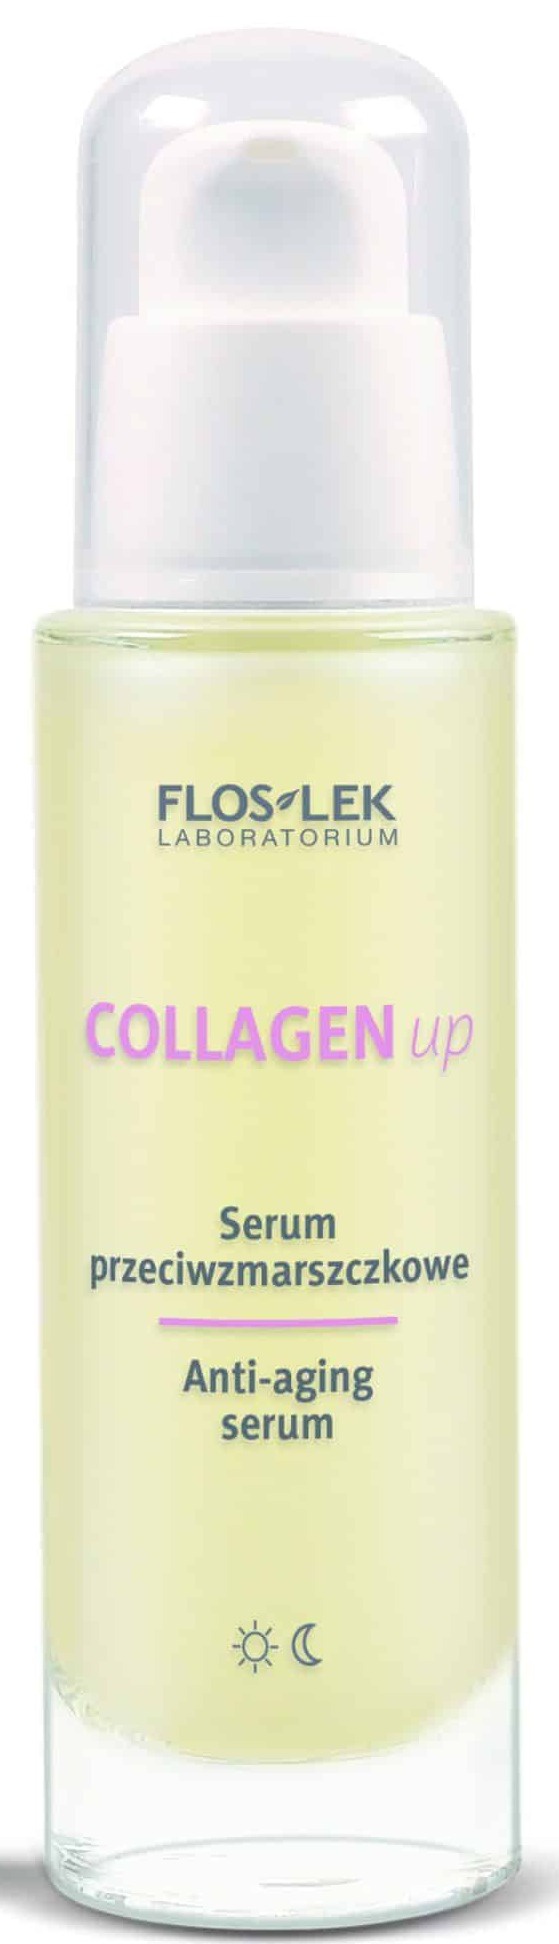 Floslek Collagen Up Anti-aging Serum